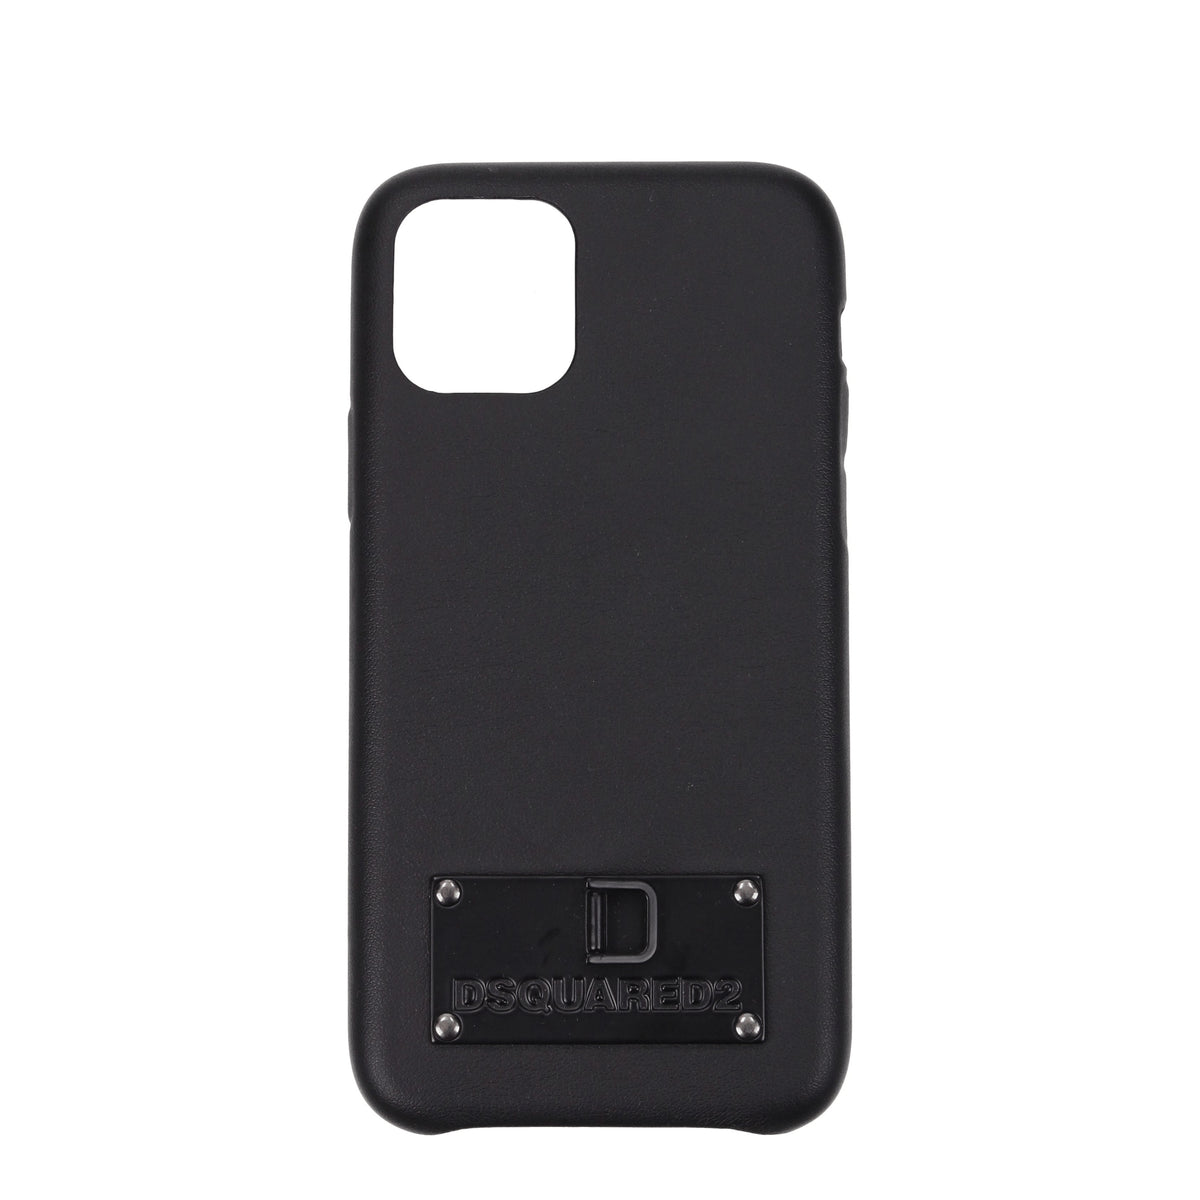 Dsquared2 Porta iPhone iphone 12/12 pro Uomo Termoplastica Nero